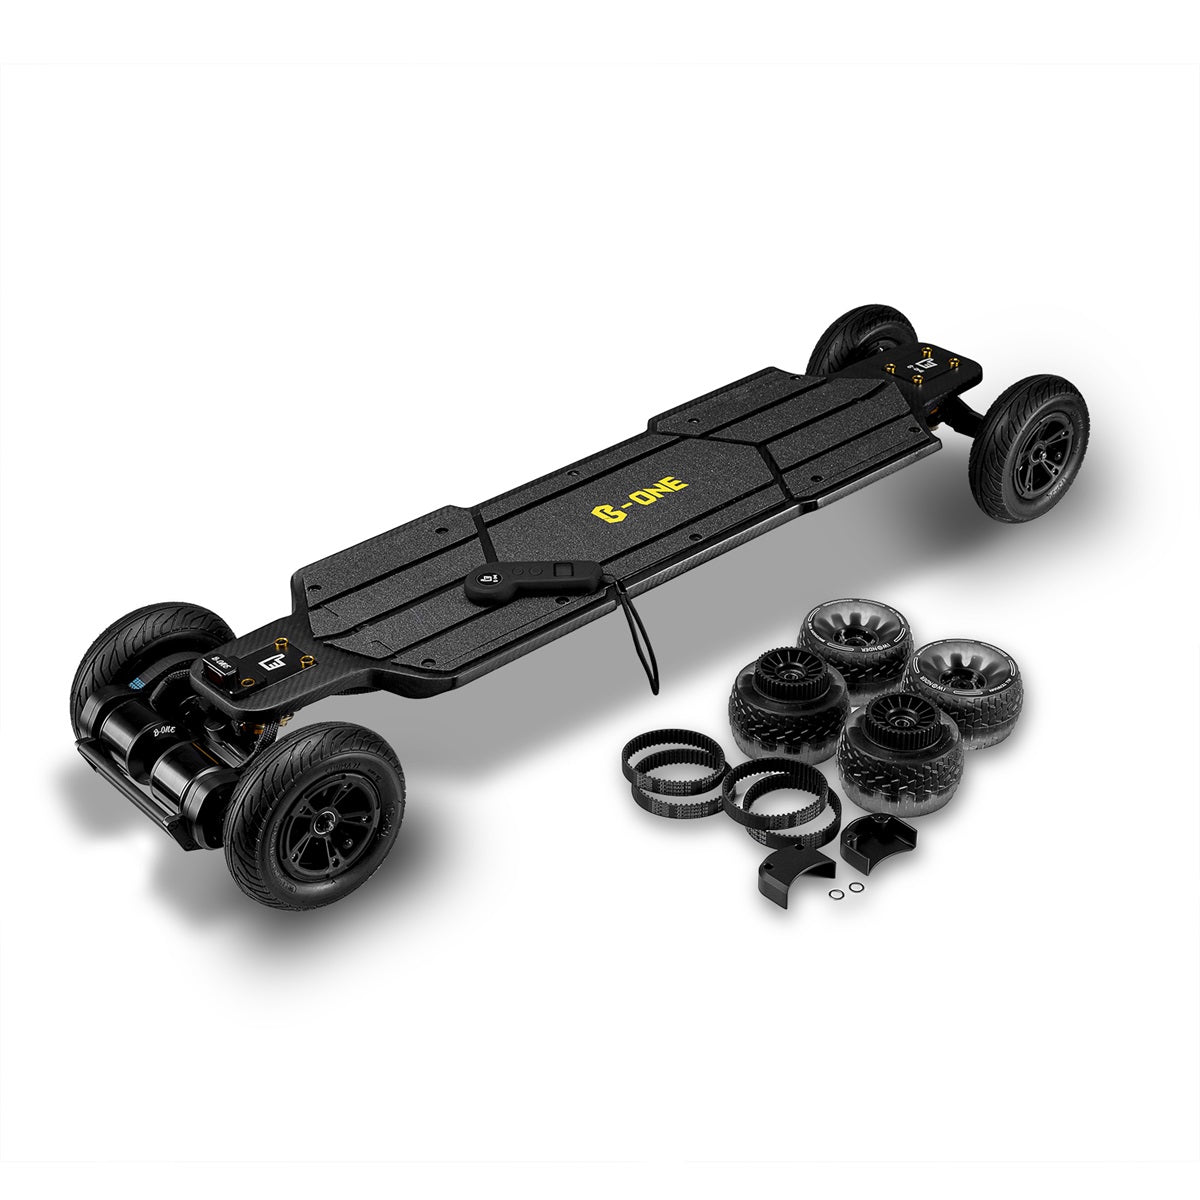 Hercules Carbon Electric Skateboard (Carbon fiber)